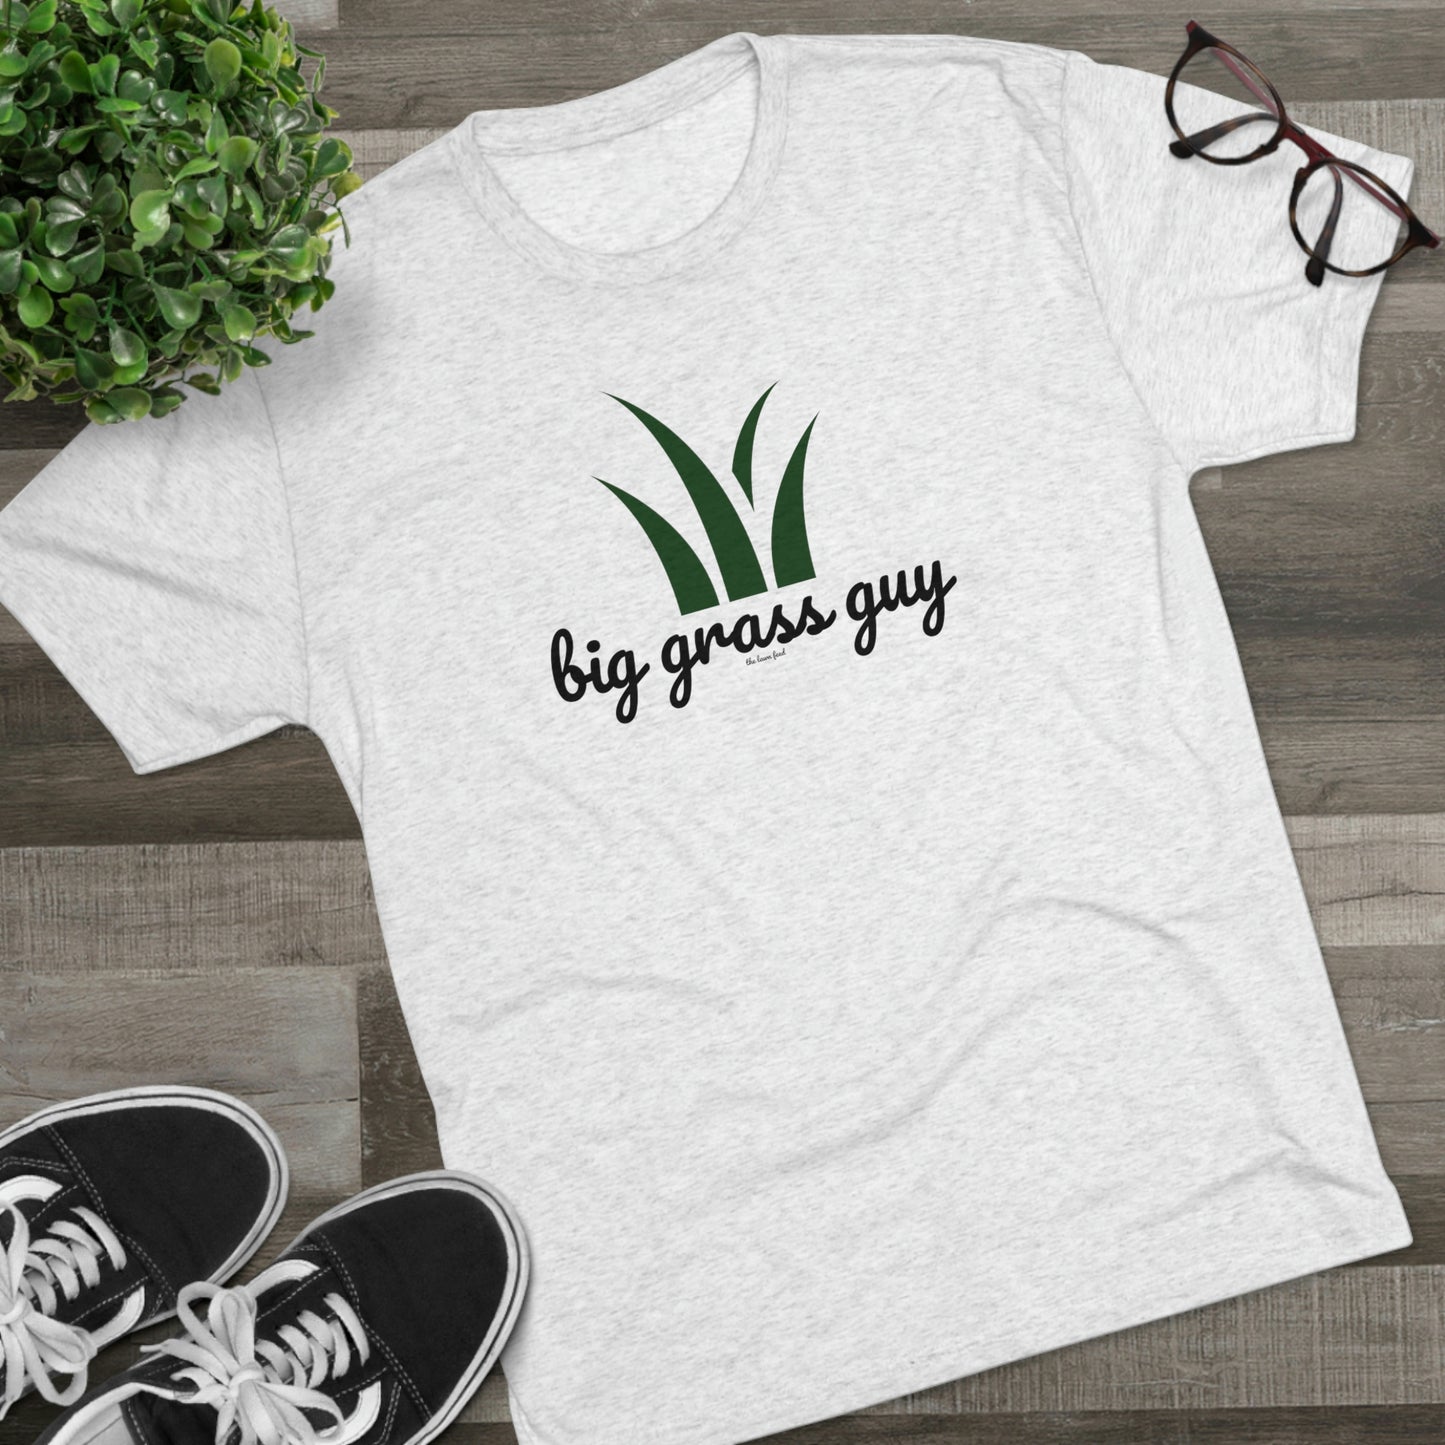 Big Grass Guy Shirt (White)